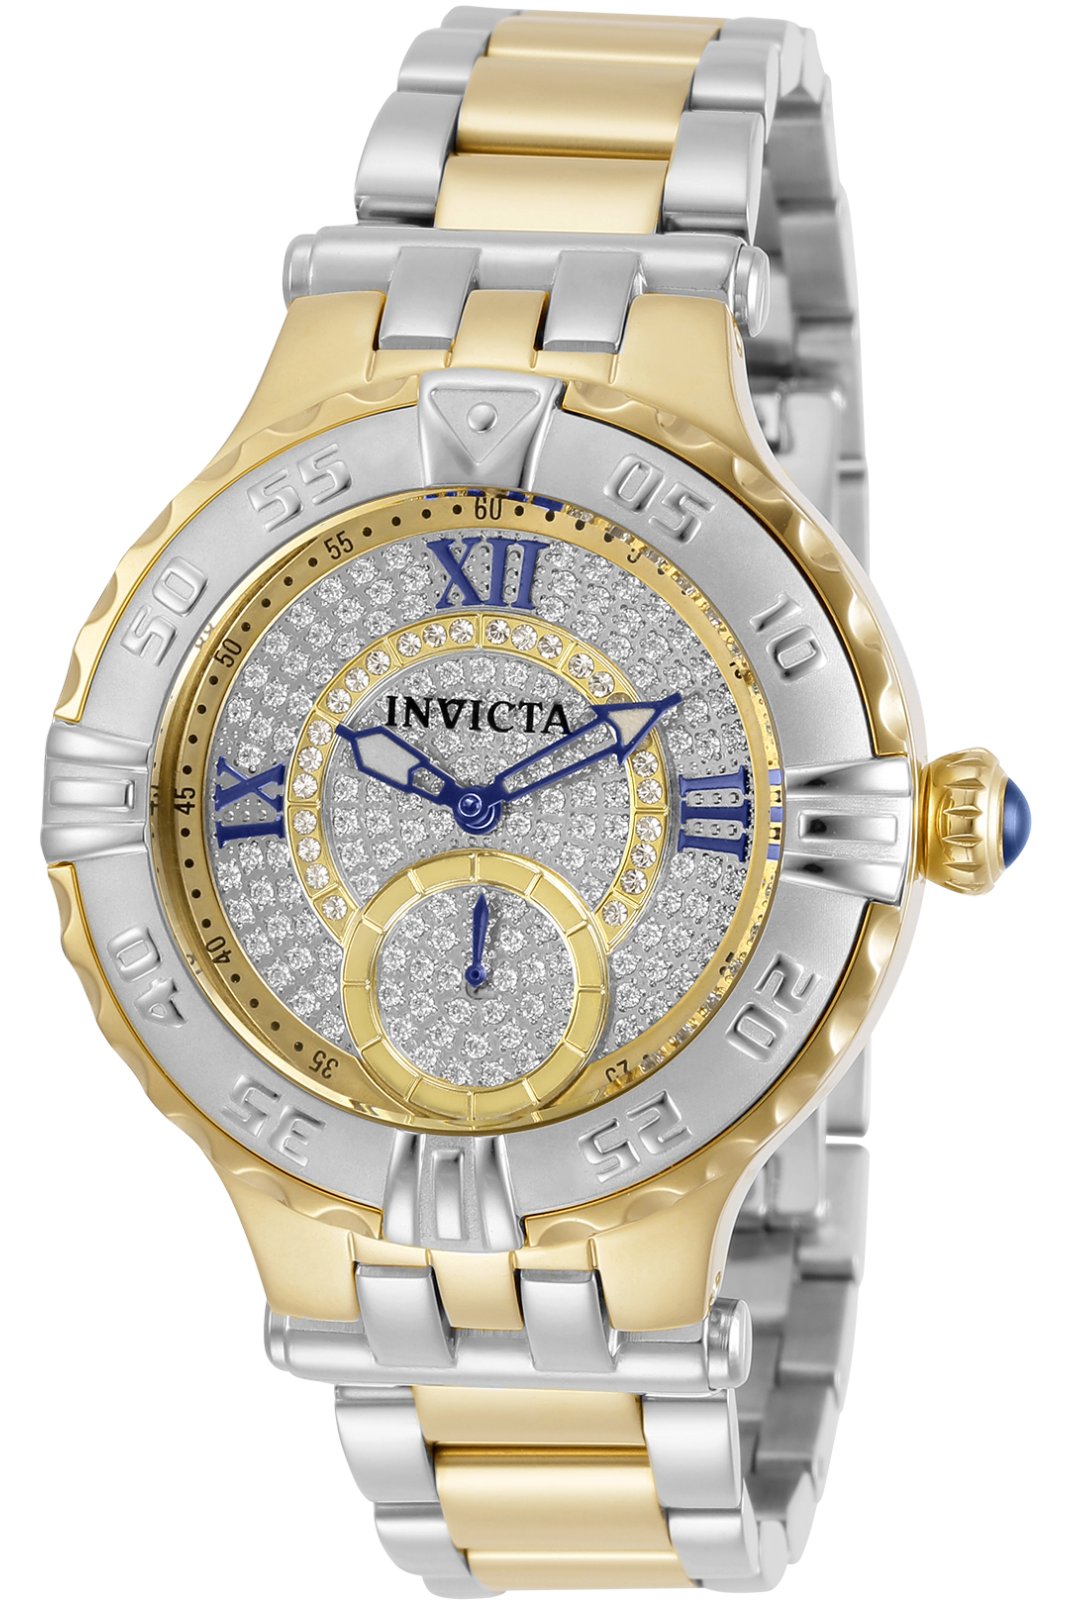 Invicta Subaqua 30007 Women's Quartz Watch - 38mm - With 176 diamonds